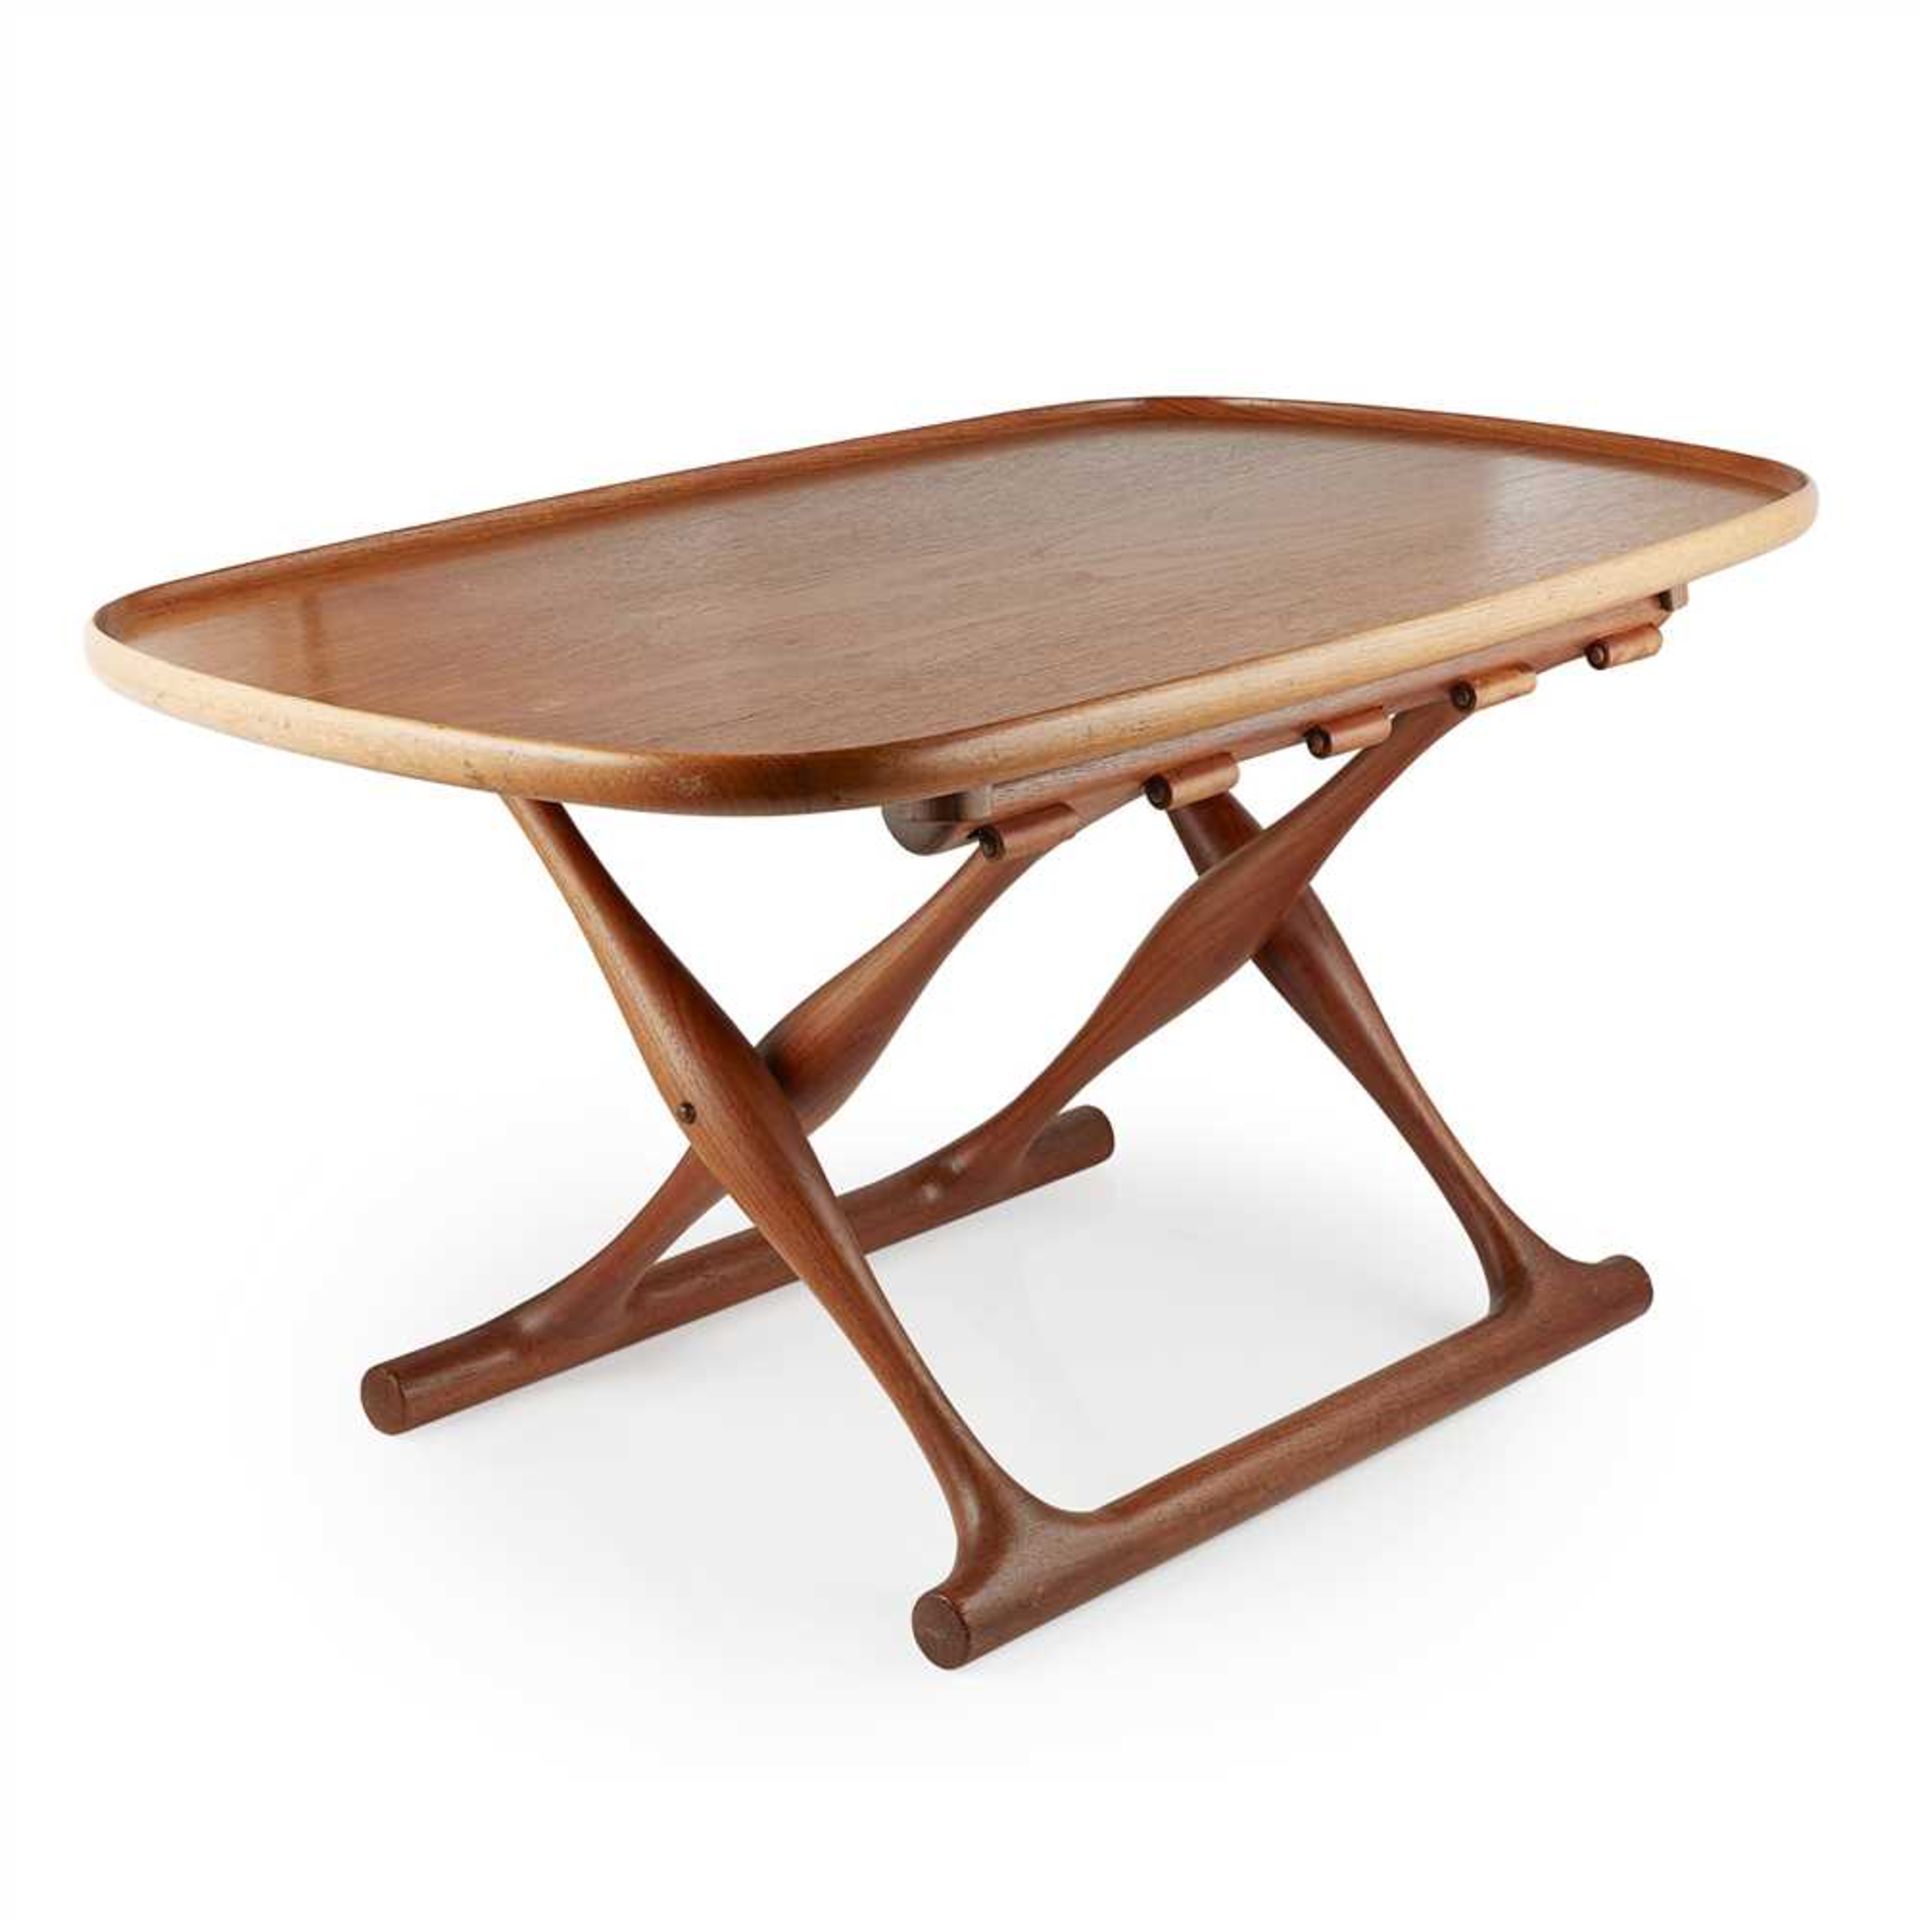 Poul Hundevad (Danish 1917-2011) for Vamdrup, Denmark 'Guldhoj' folding stool/table